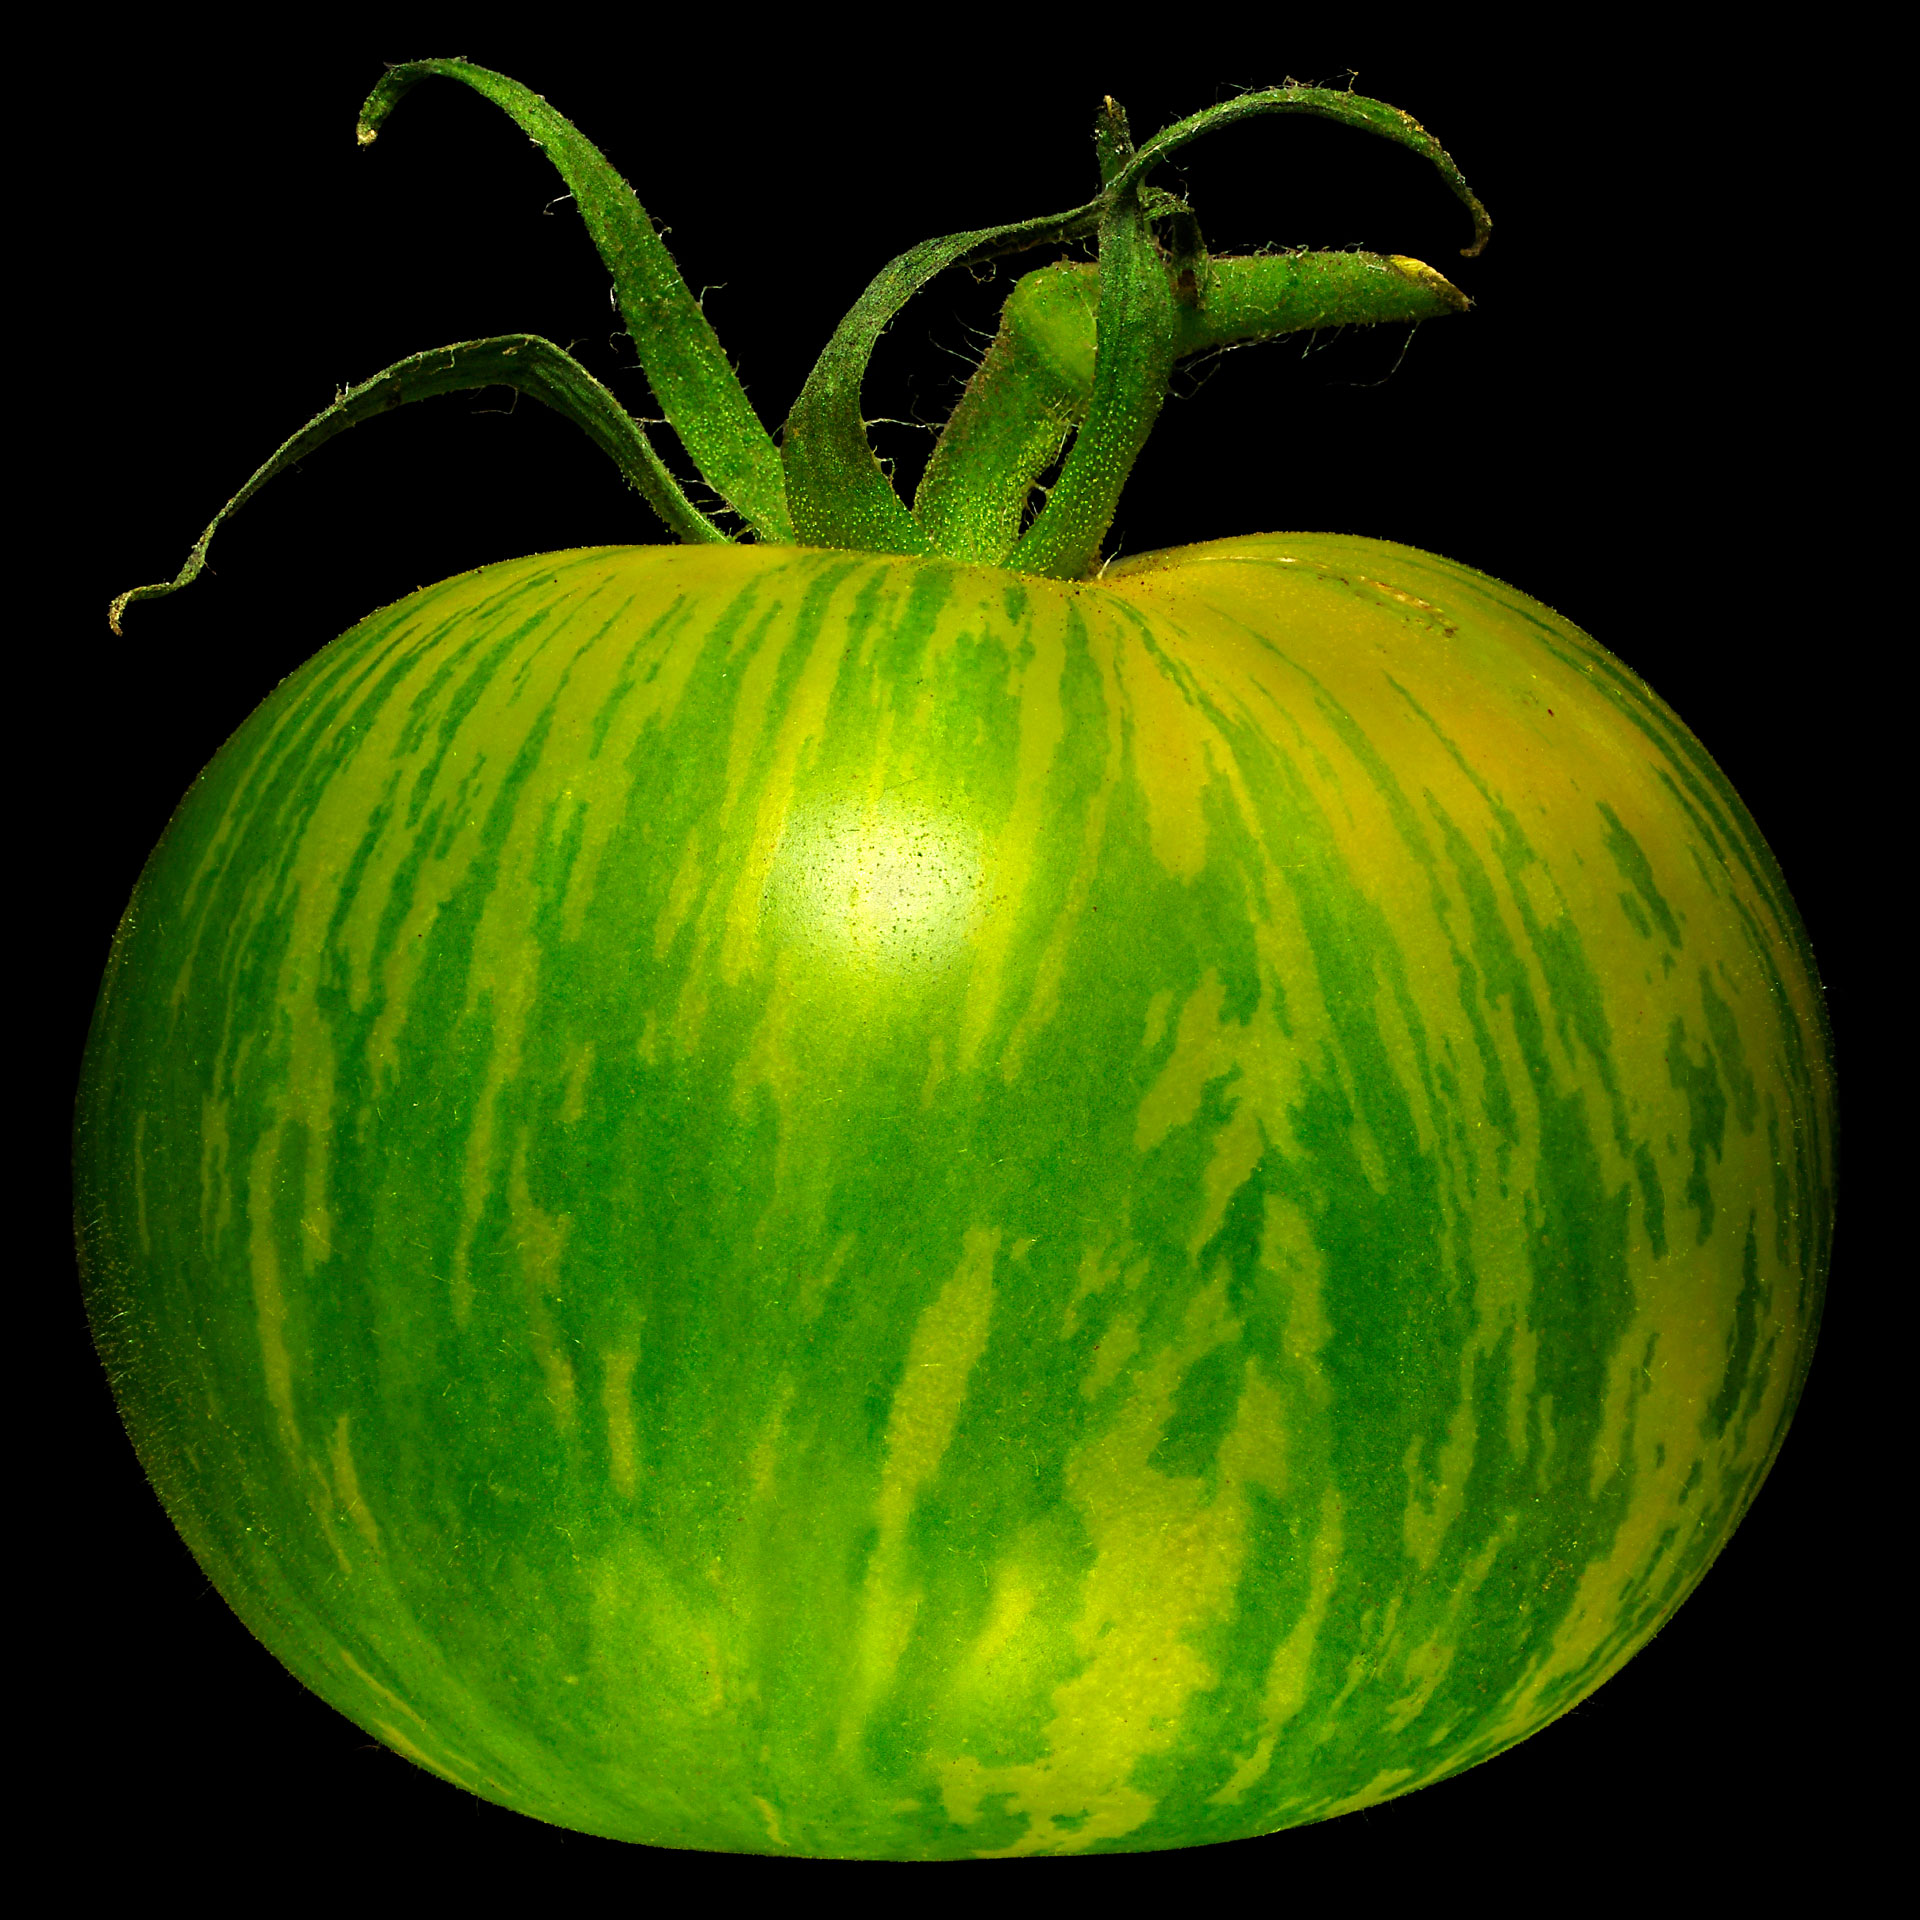 Green Zebra (striped tomato): Solanum lycopersicum ‚Green Zebra‘